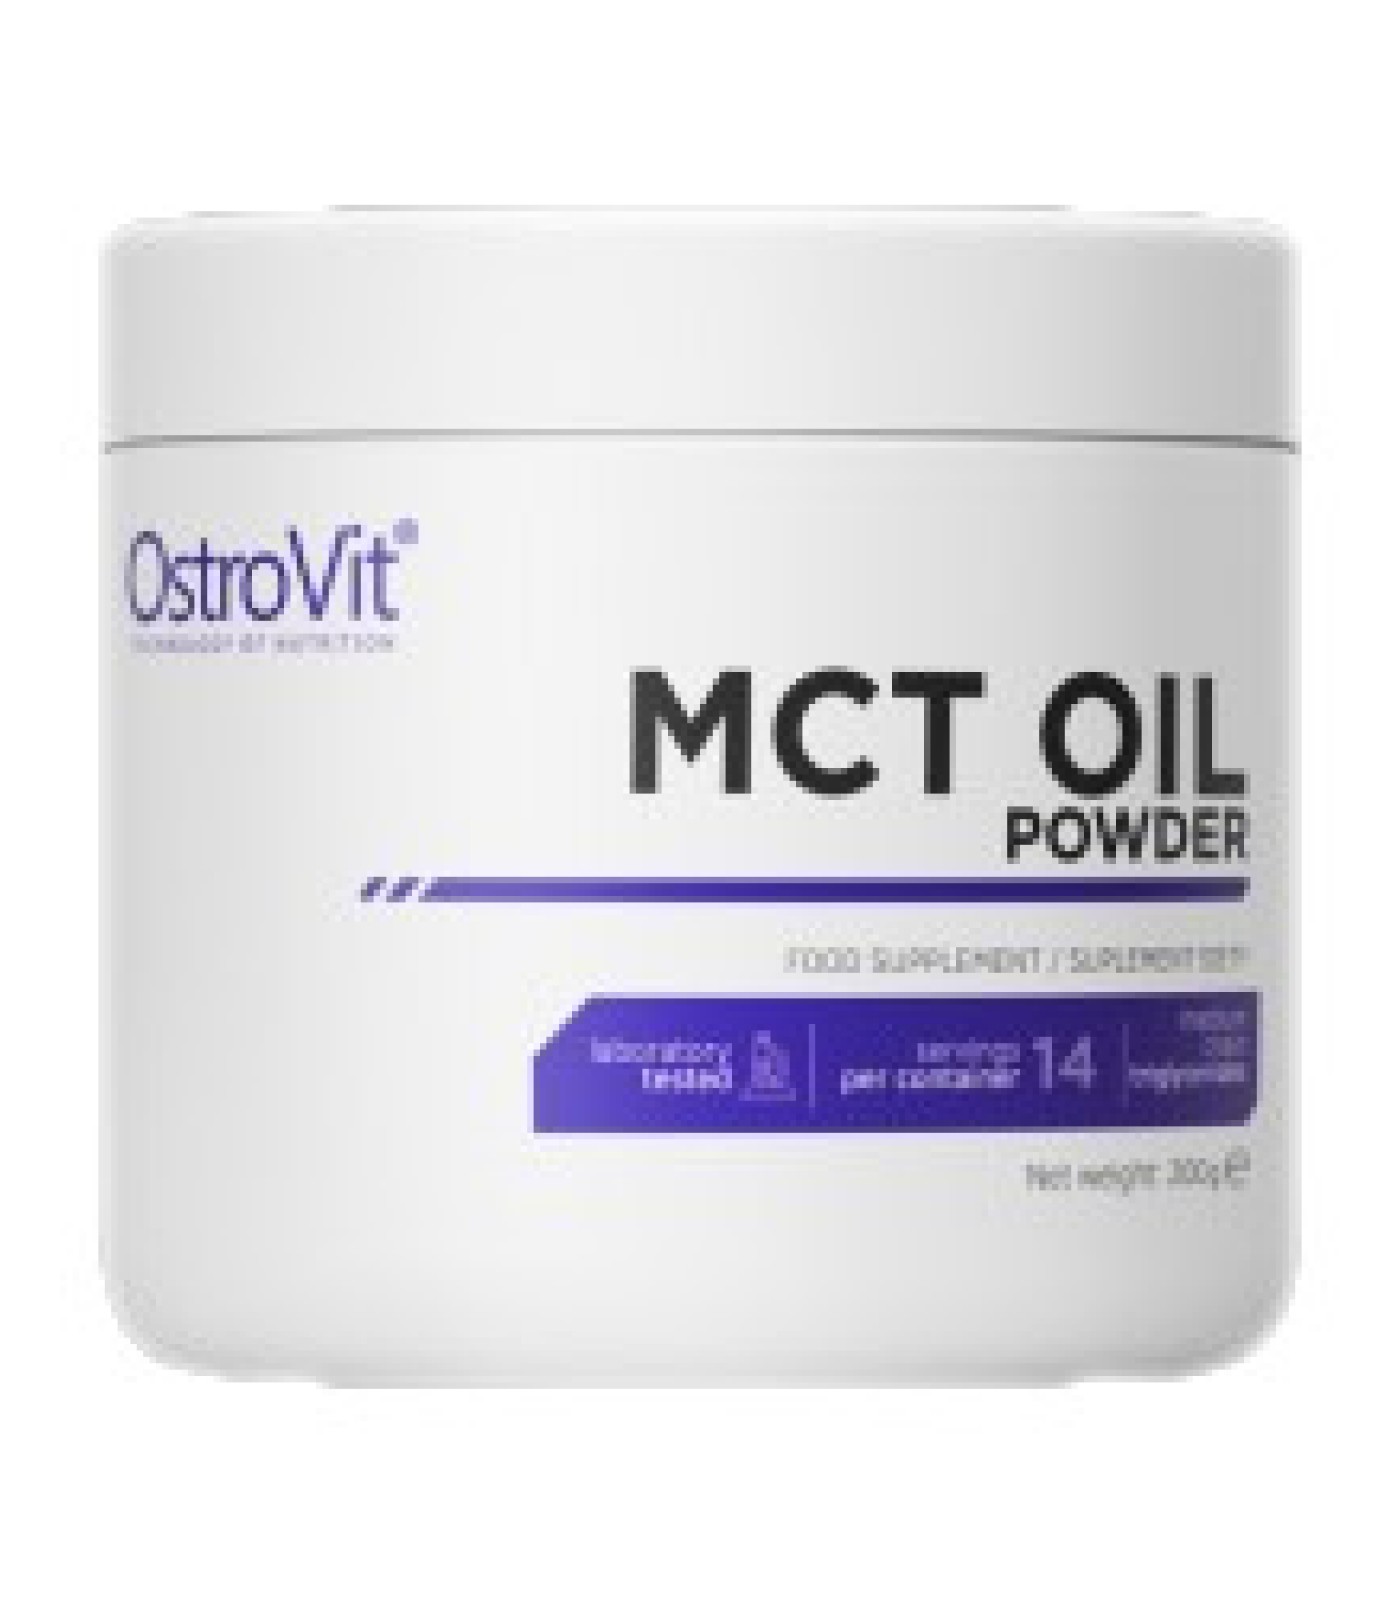 OstroVit - MCT Oil Powder / 200 грама, 14 дози